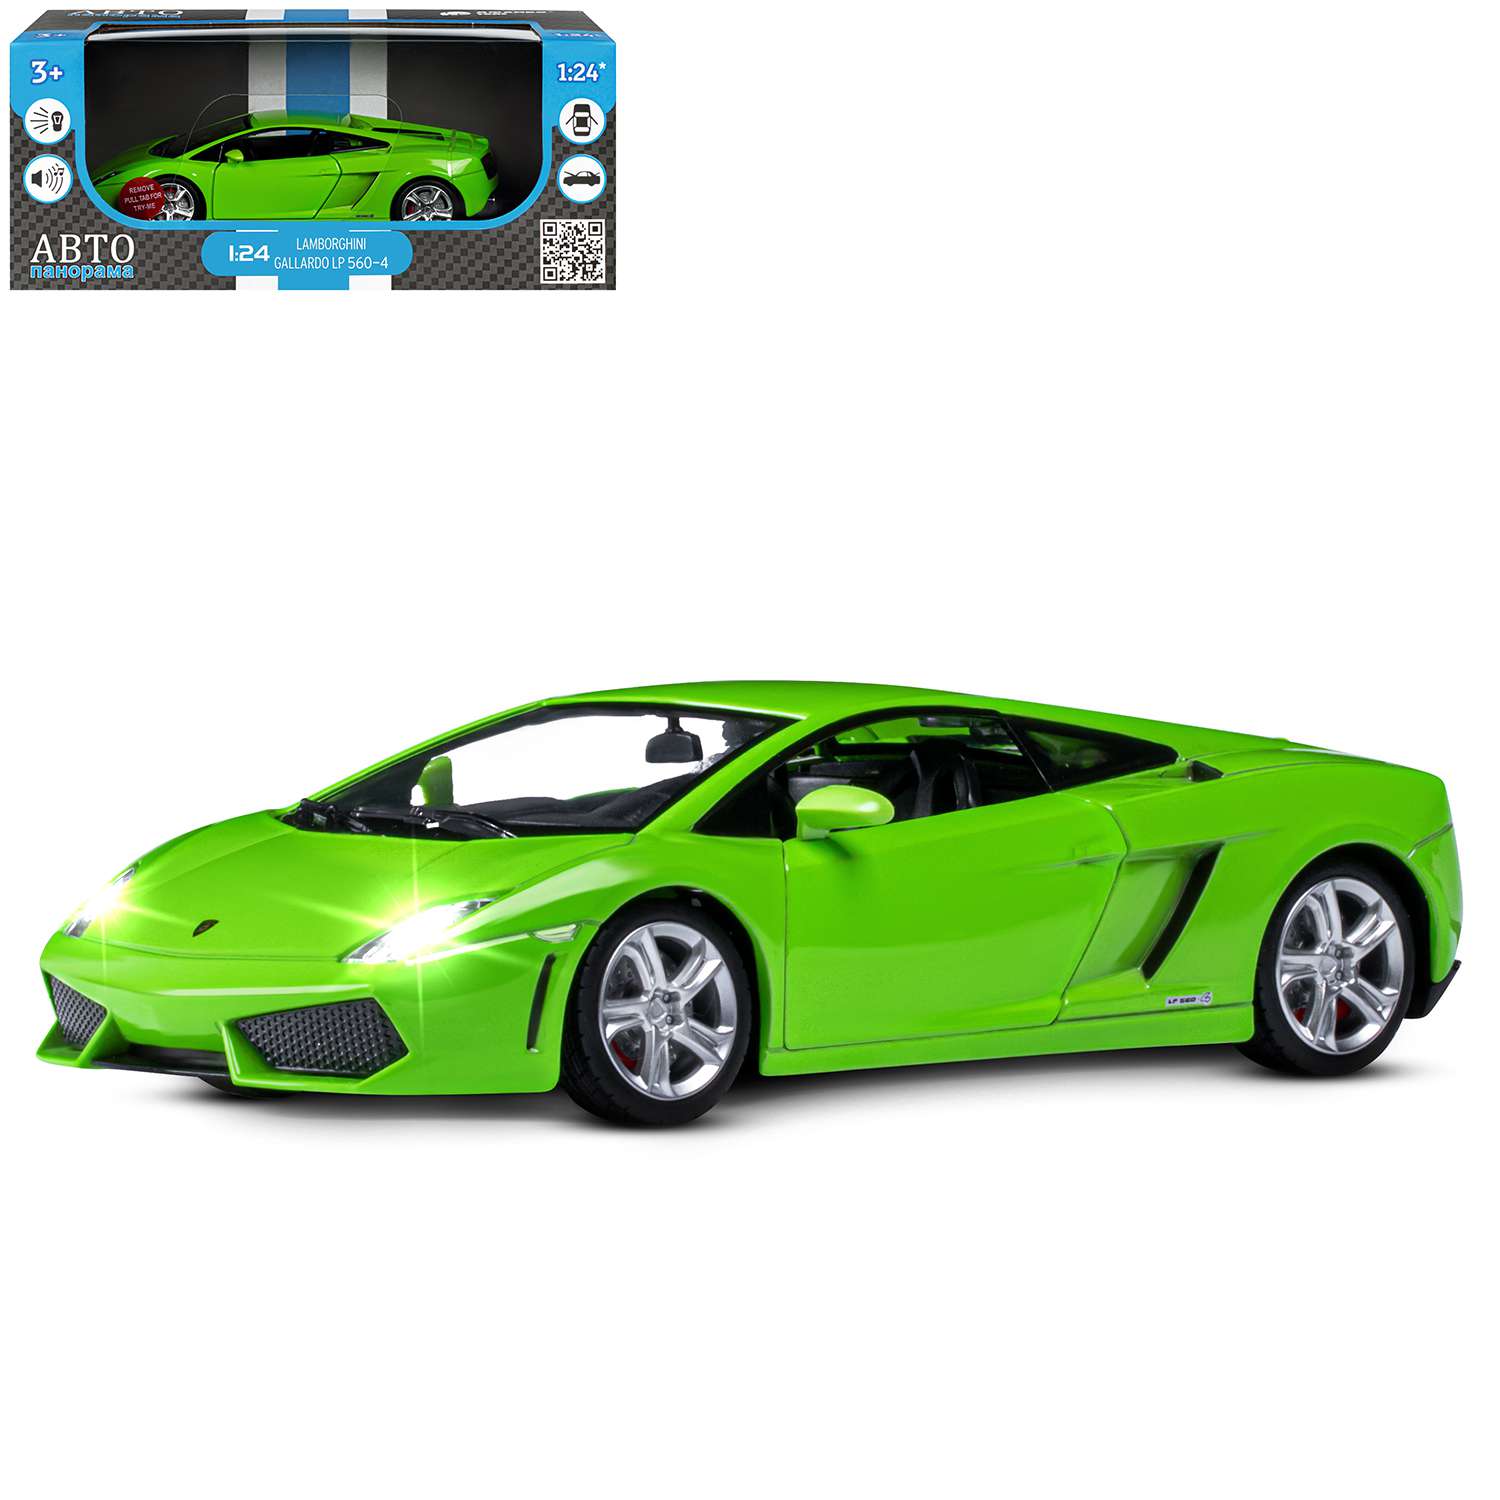 Машина JB1251382 Lamborghini Gallardo LP560-4 металл 1:24 зеленый свет, звук ТМ Автопанорама - Казань 